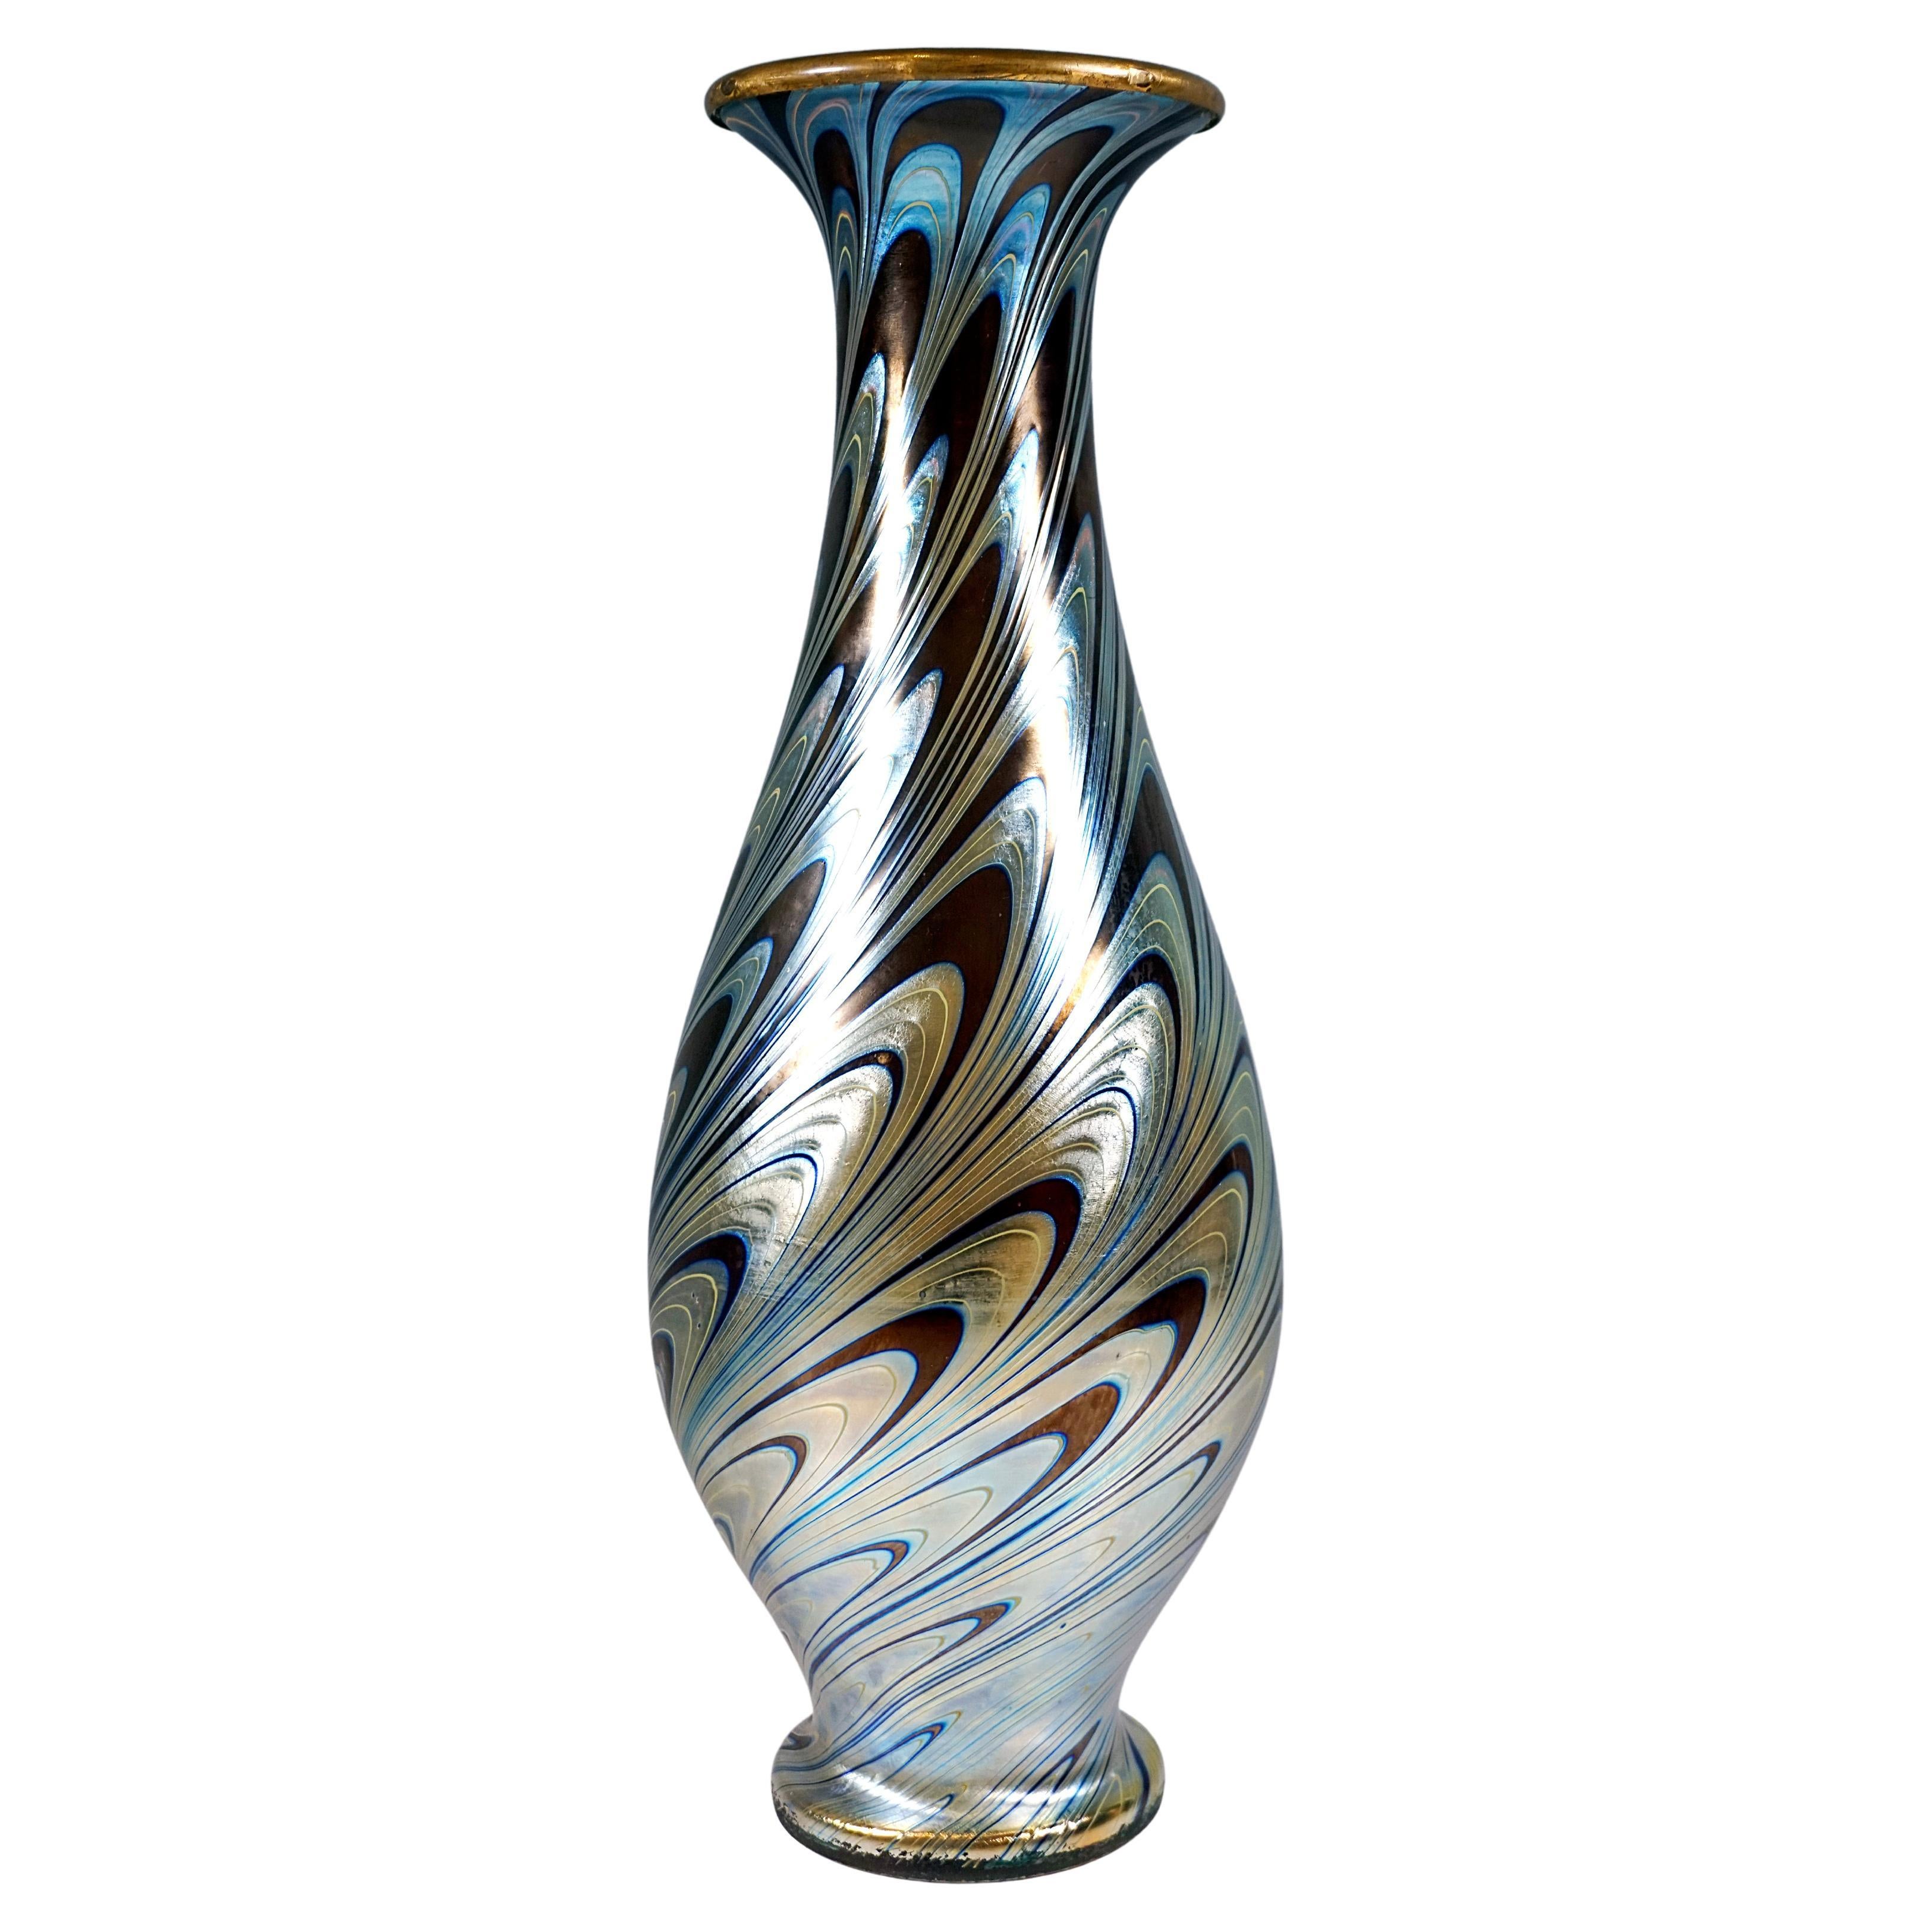 Large Loetz Art Nouveau Vase, Ruby Phenomenon Gre 7624, Austria-Hungary, Ca 1898 For Sale